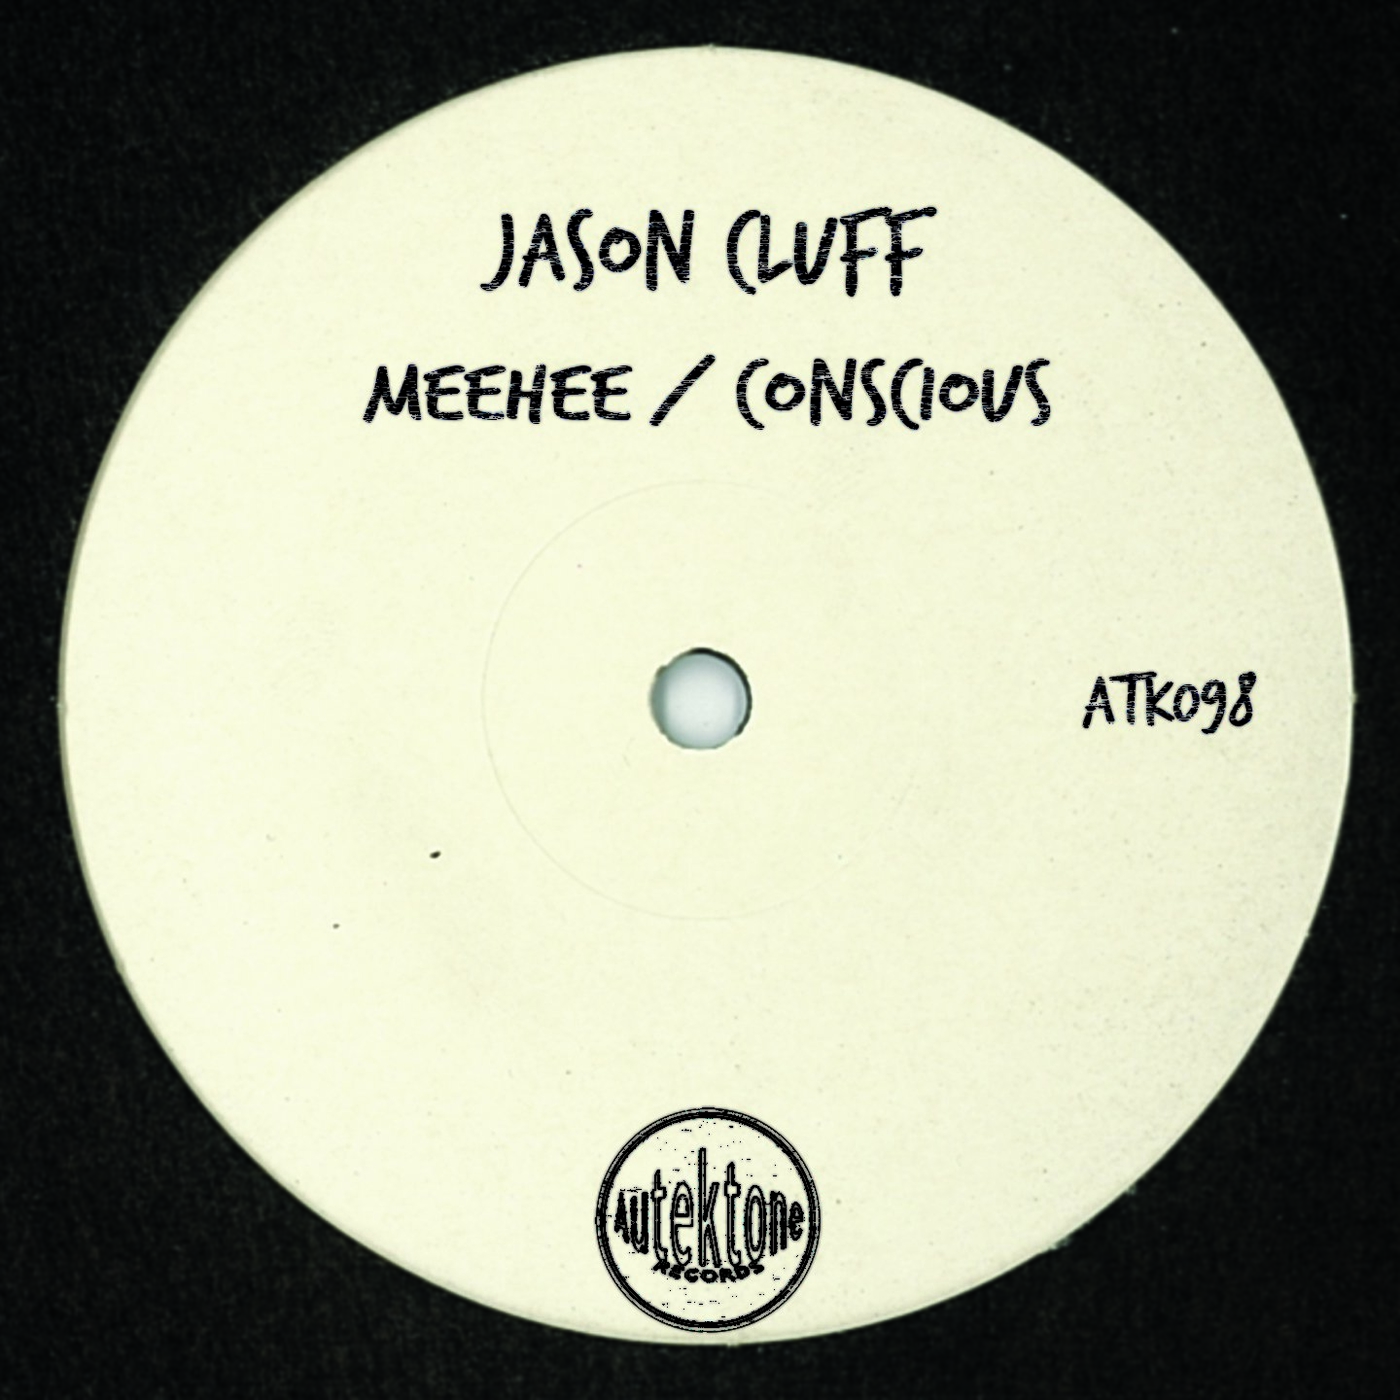 Jason Cluff - Meehee - Conscious [ATK098]